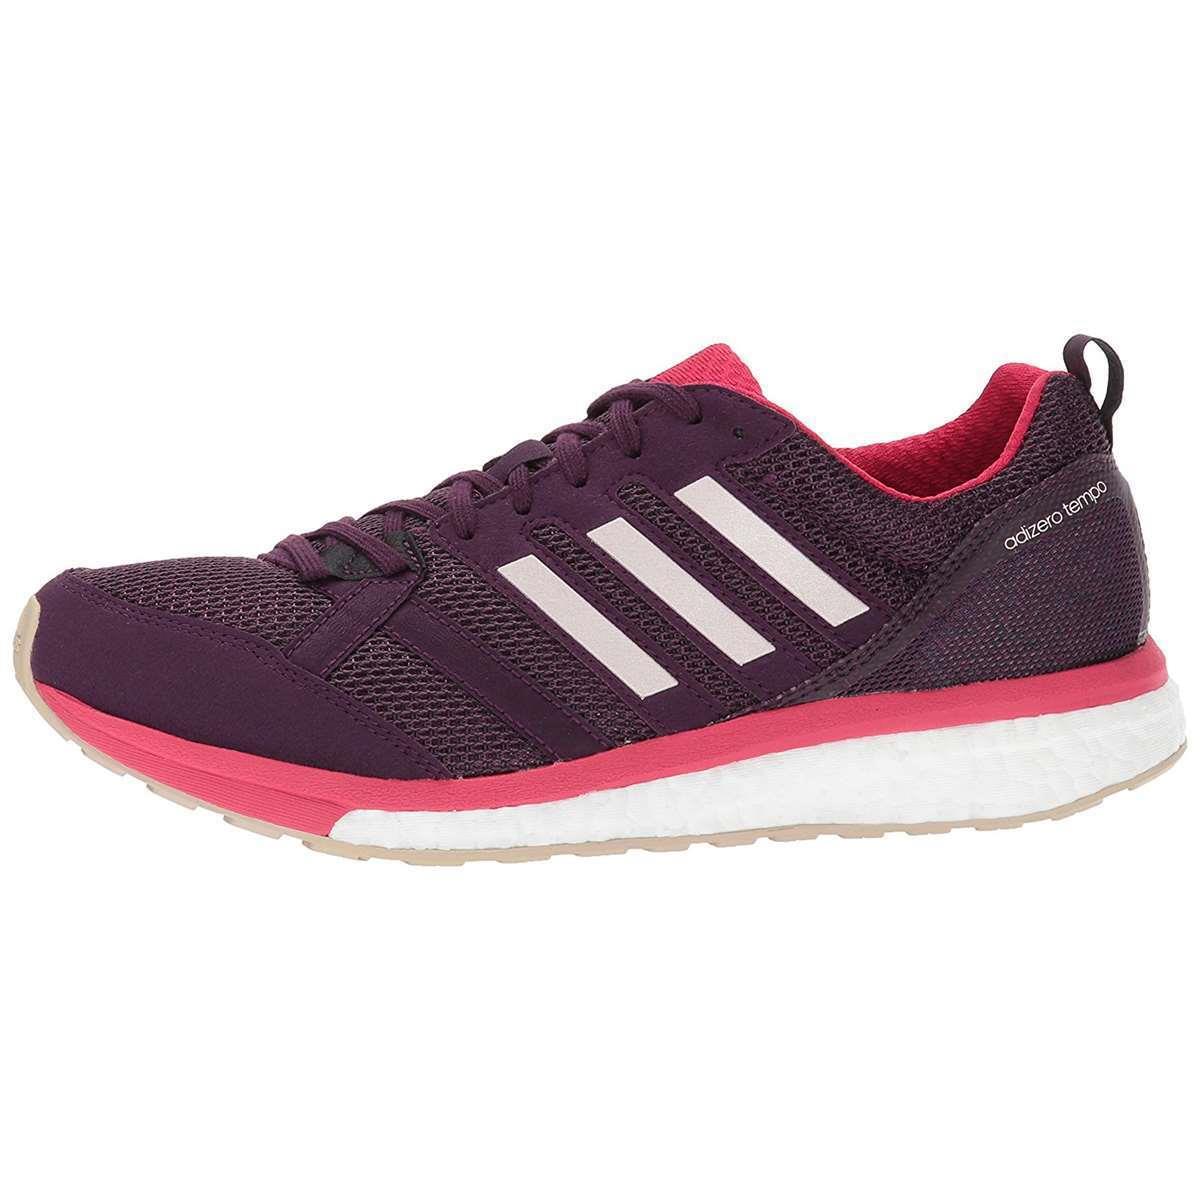 Adidas Women Adizero Tempo 9 Running Training Shoes Sneakers - Red Night